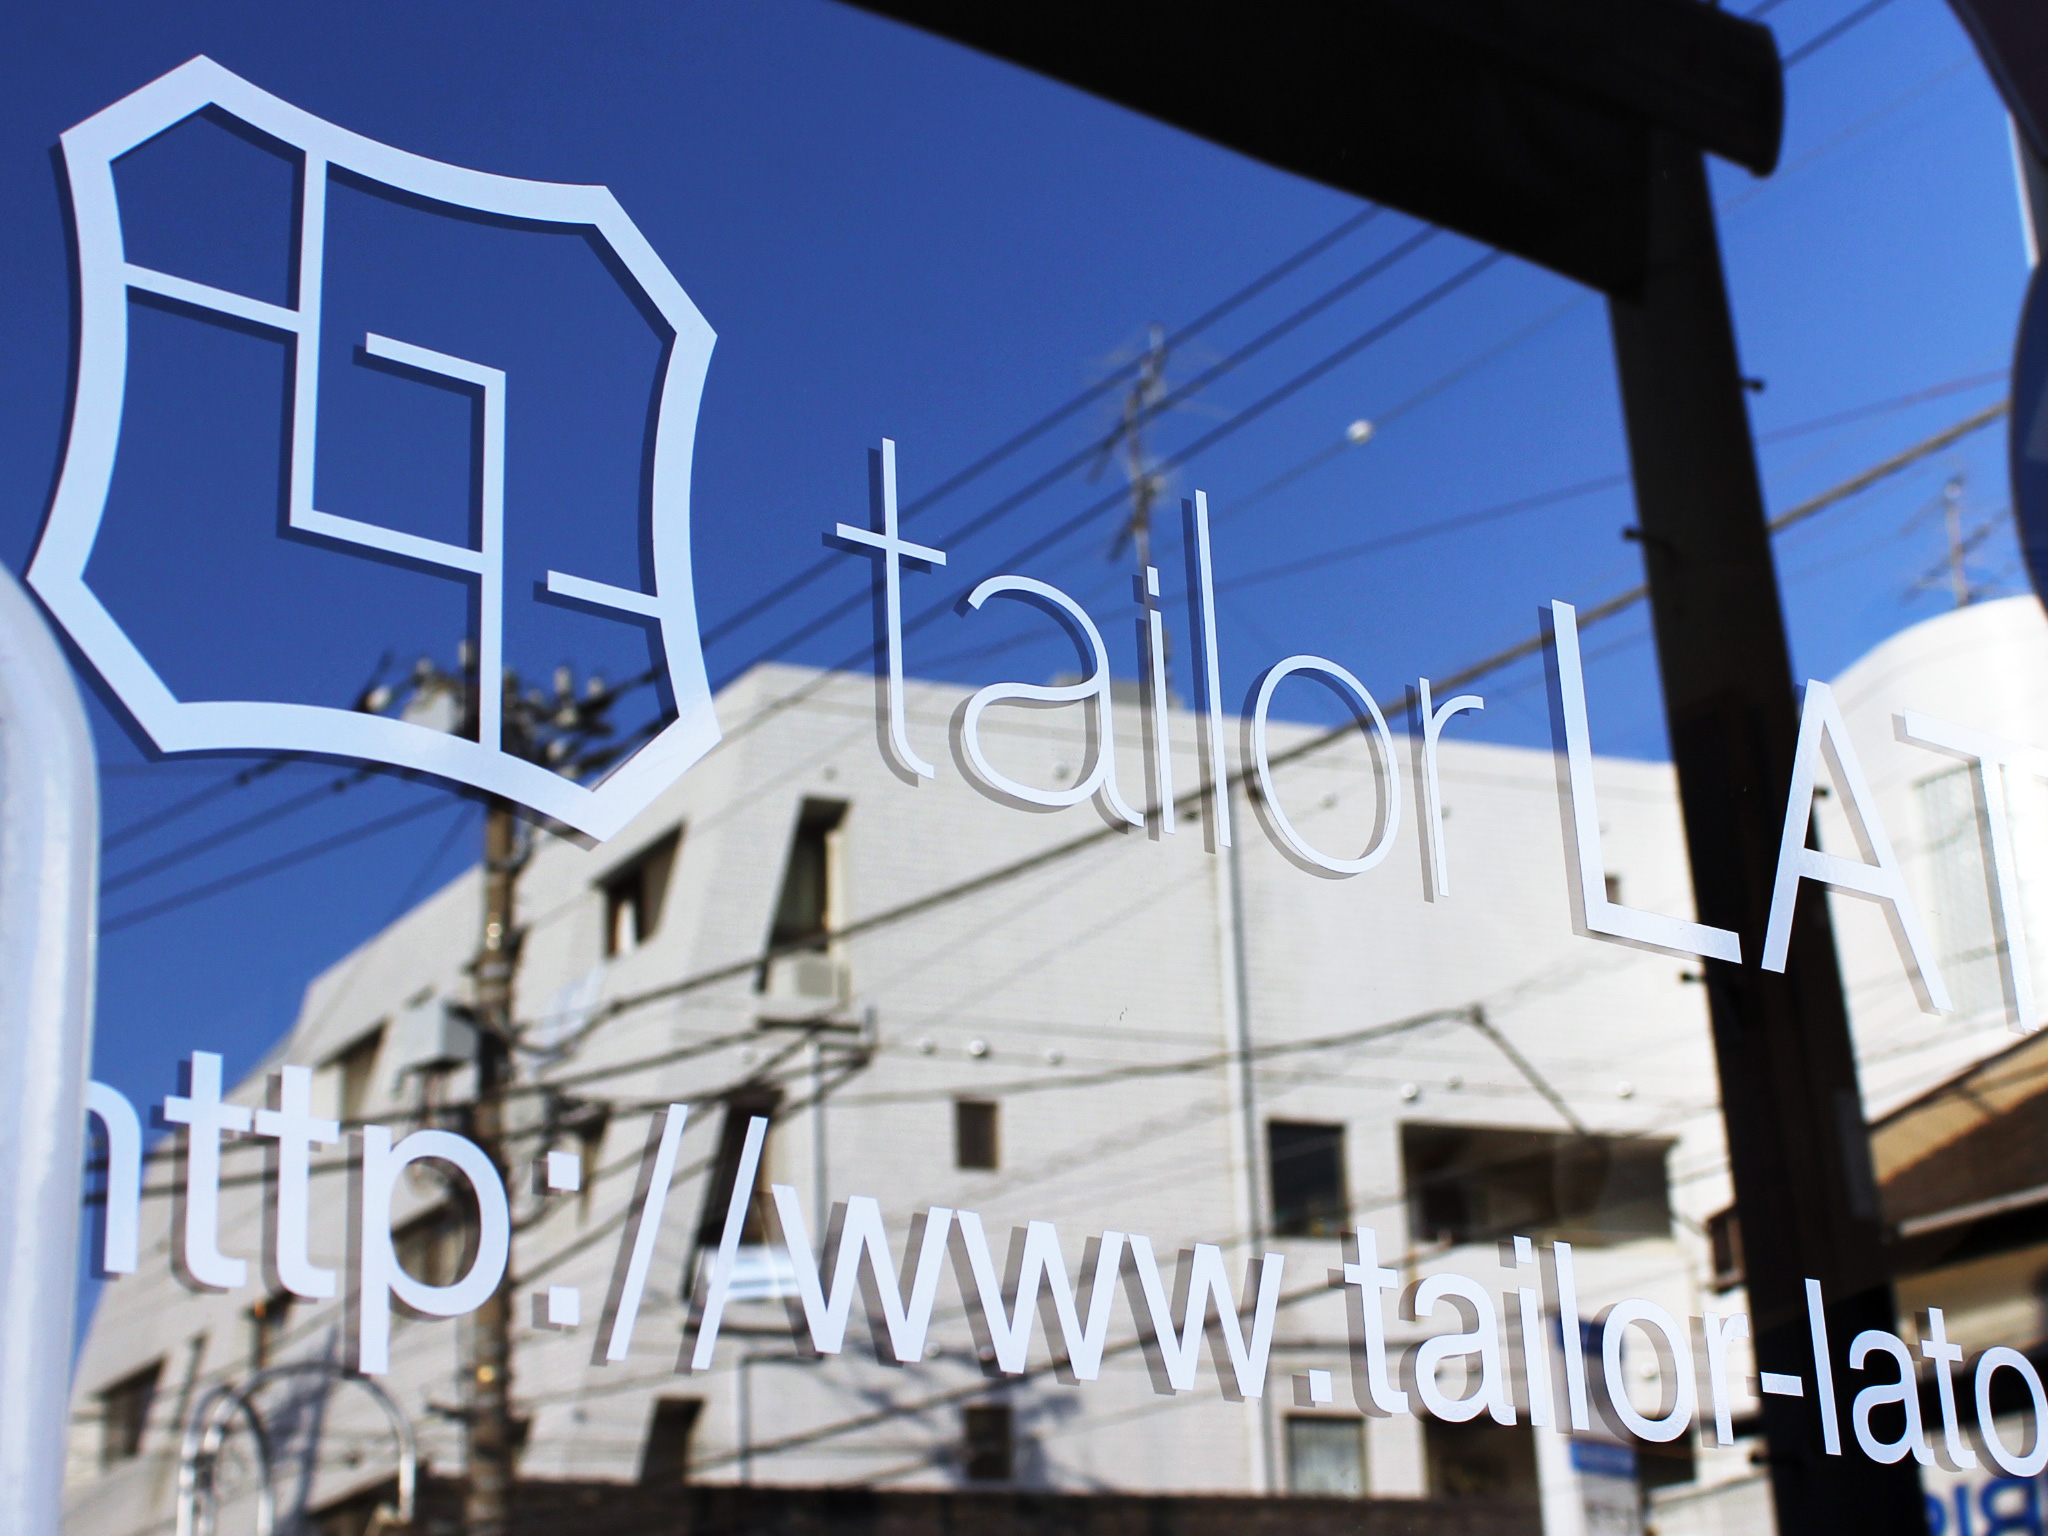 tailor LATO Logo